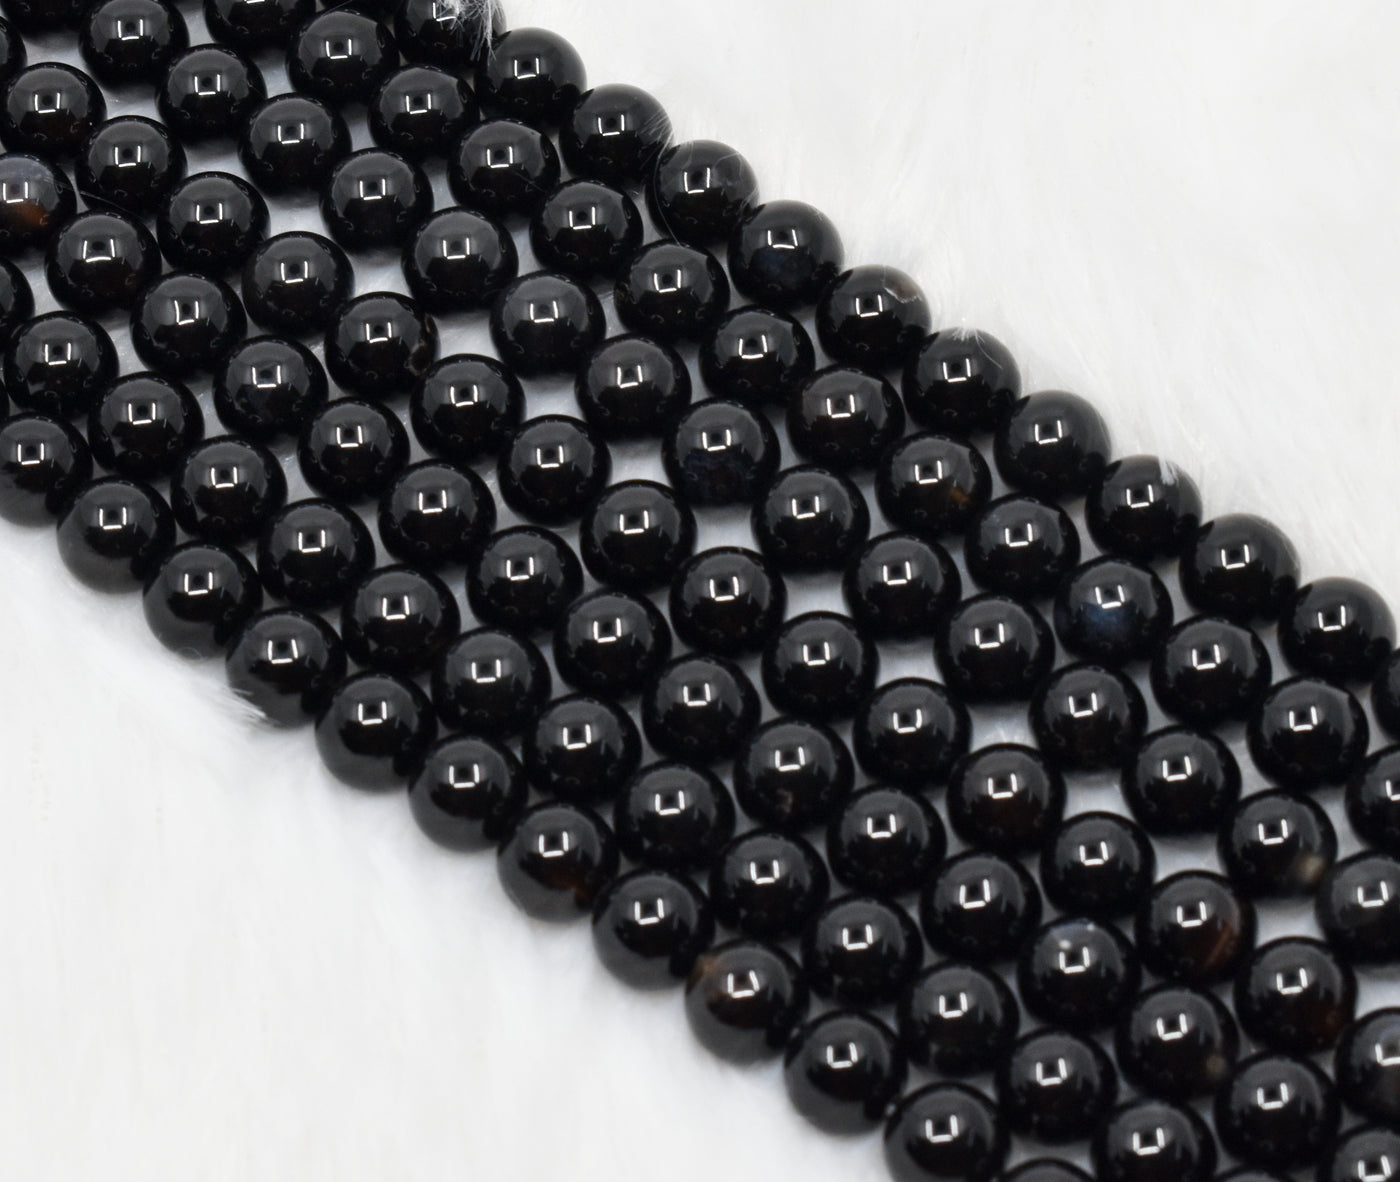 Onyx noir AAA Grade 2mm, 3mm, 4mm, 6mm, 8mm, 10mm, 12mm Perles rondes 